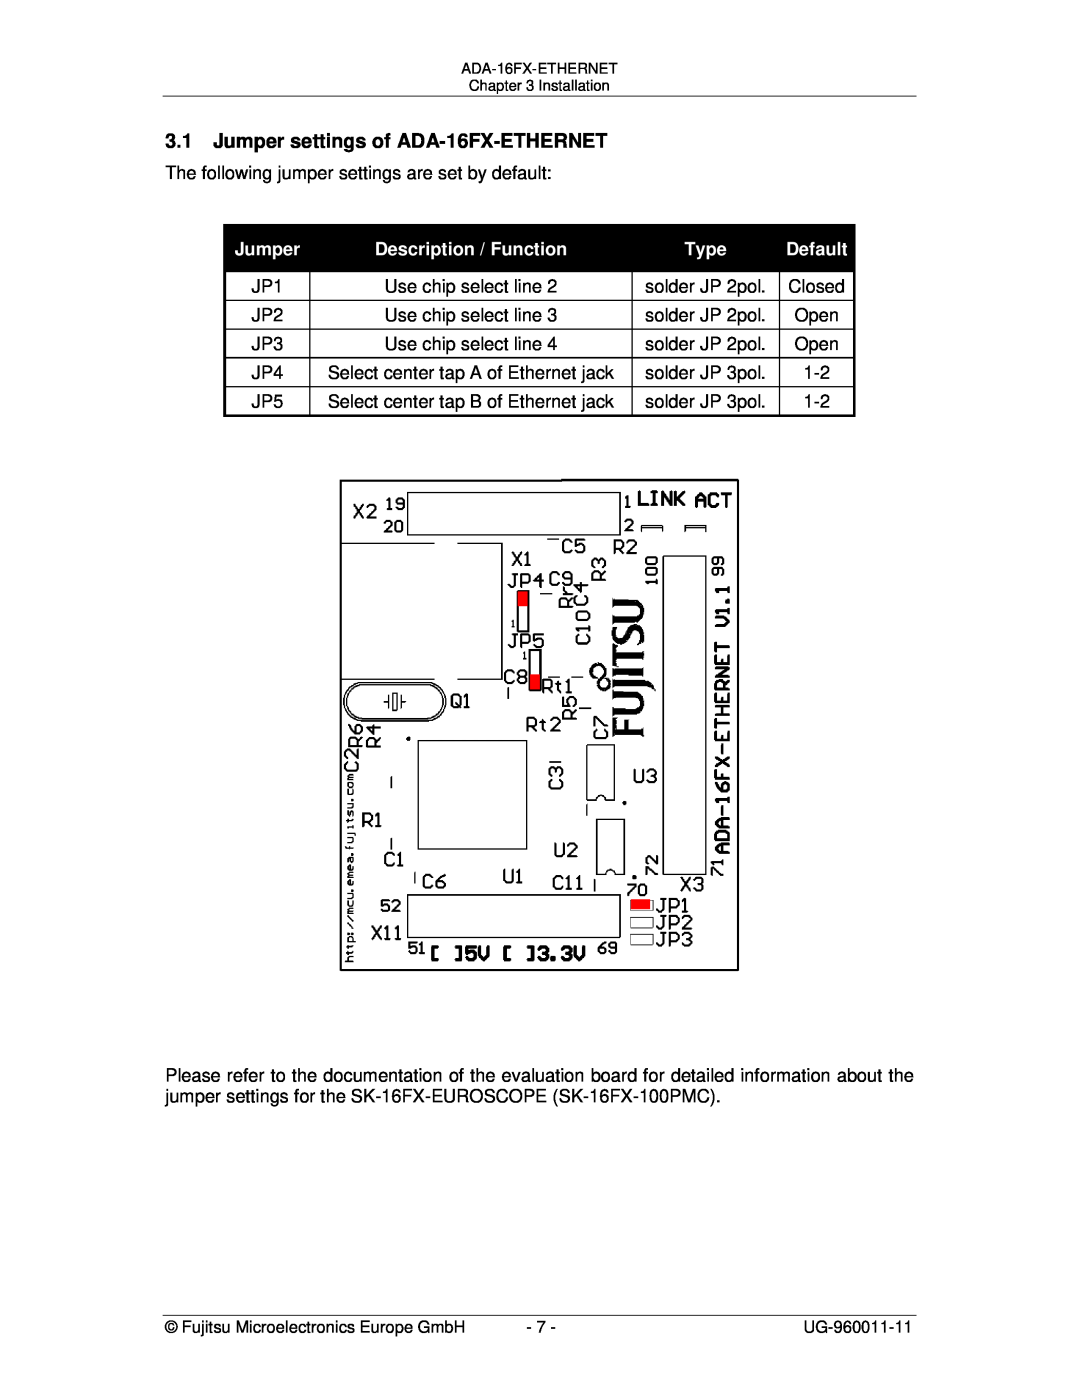 Fujitsu manual Jumper settings of ADA-16FX-ETHERNET, Description / Function, Type, Default 